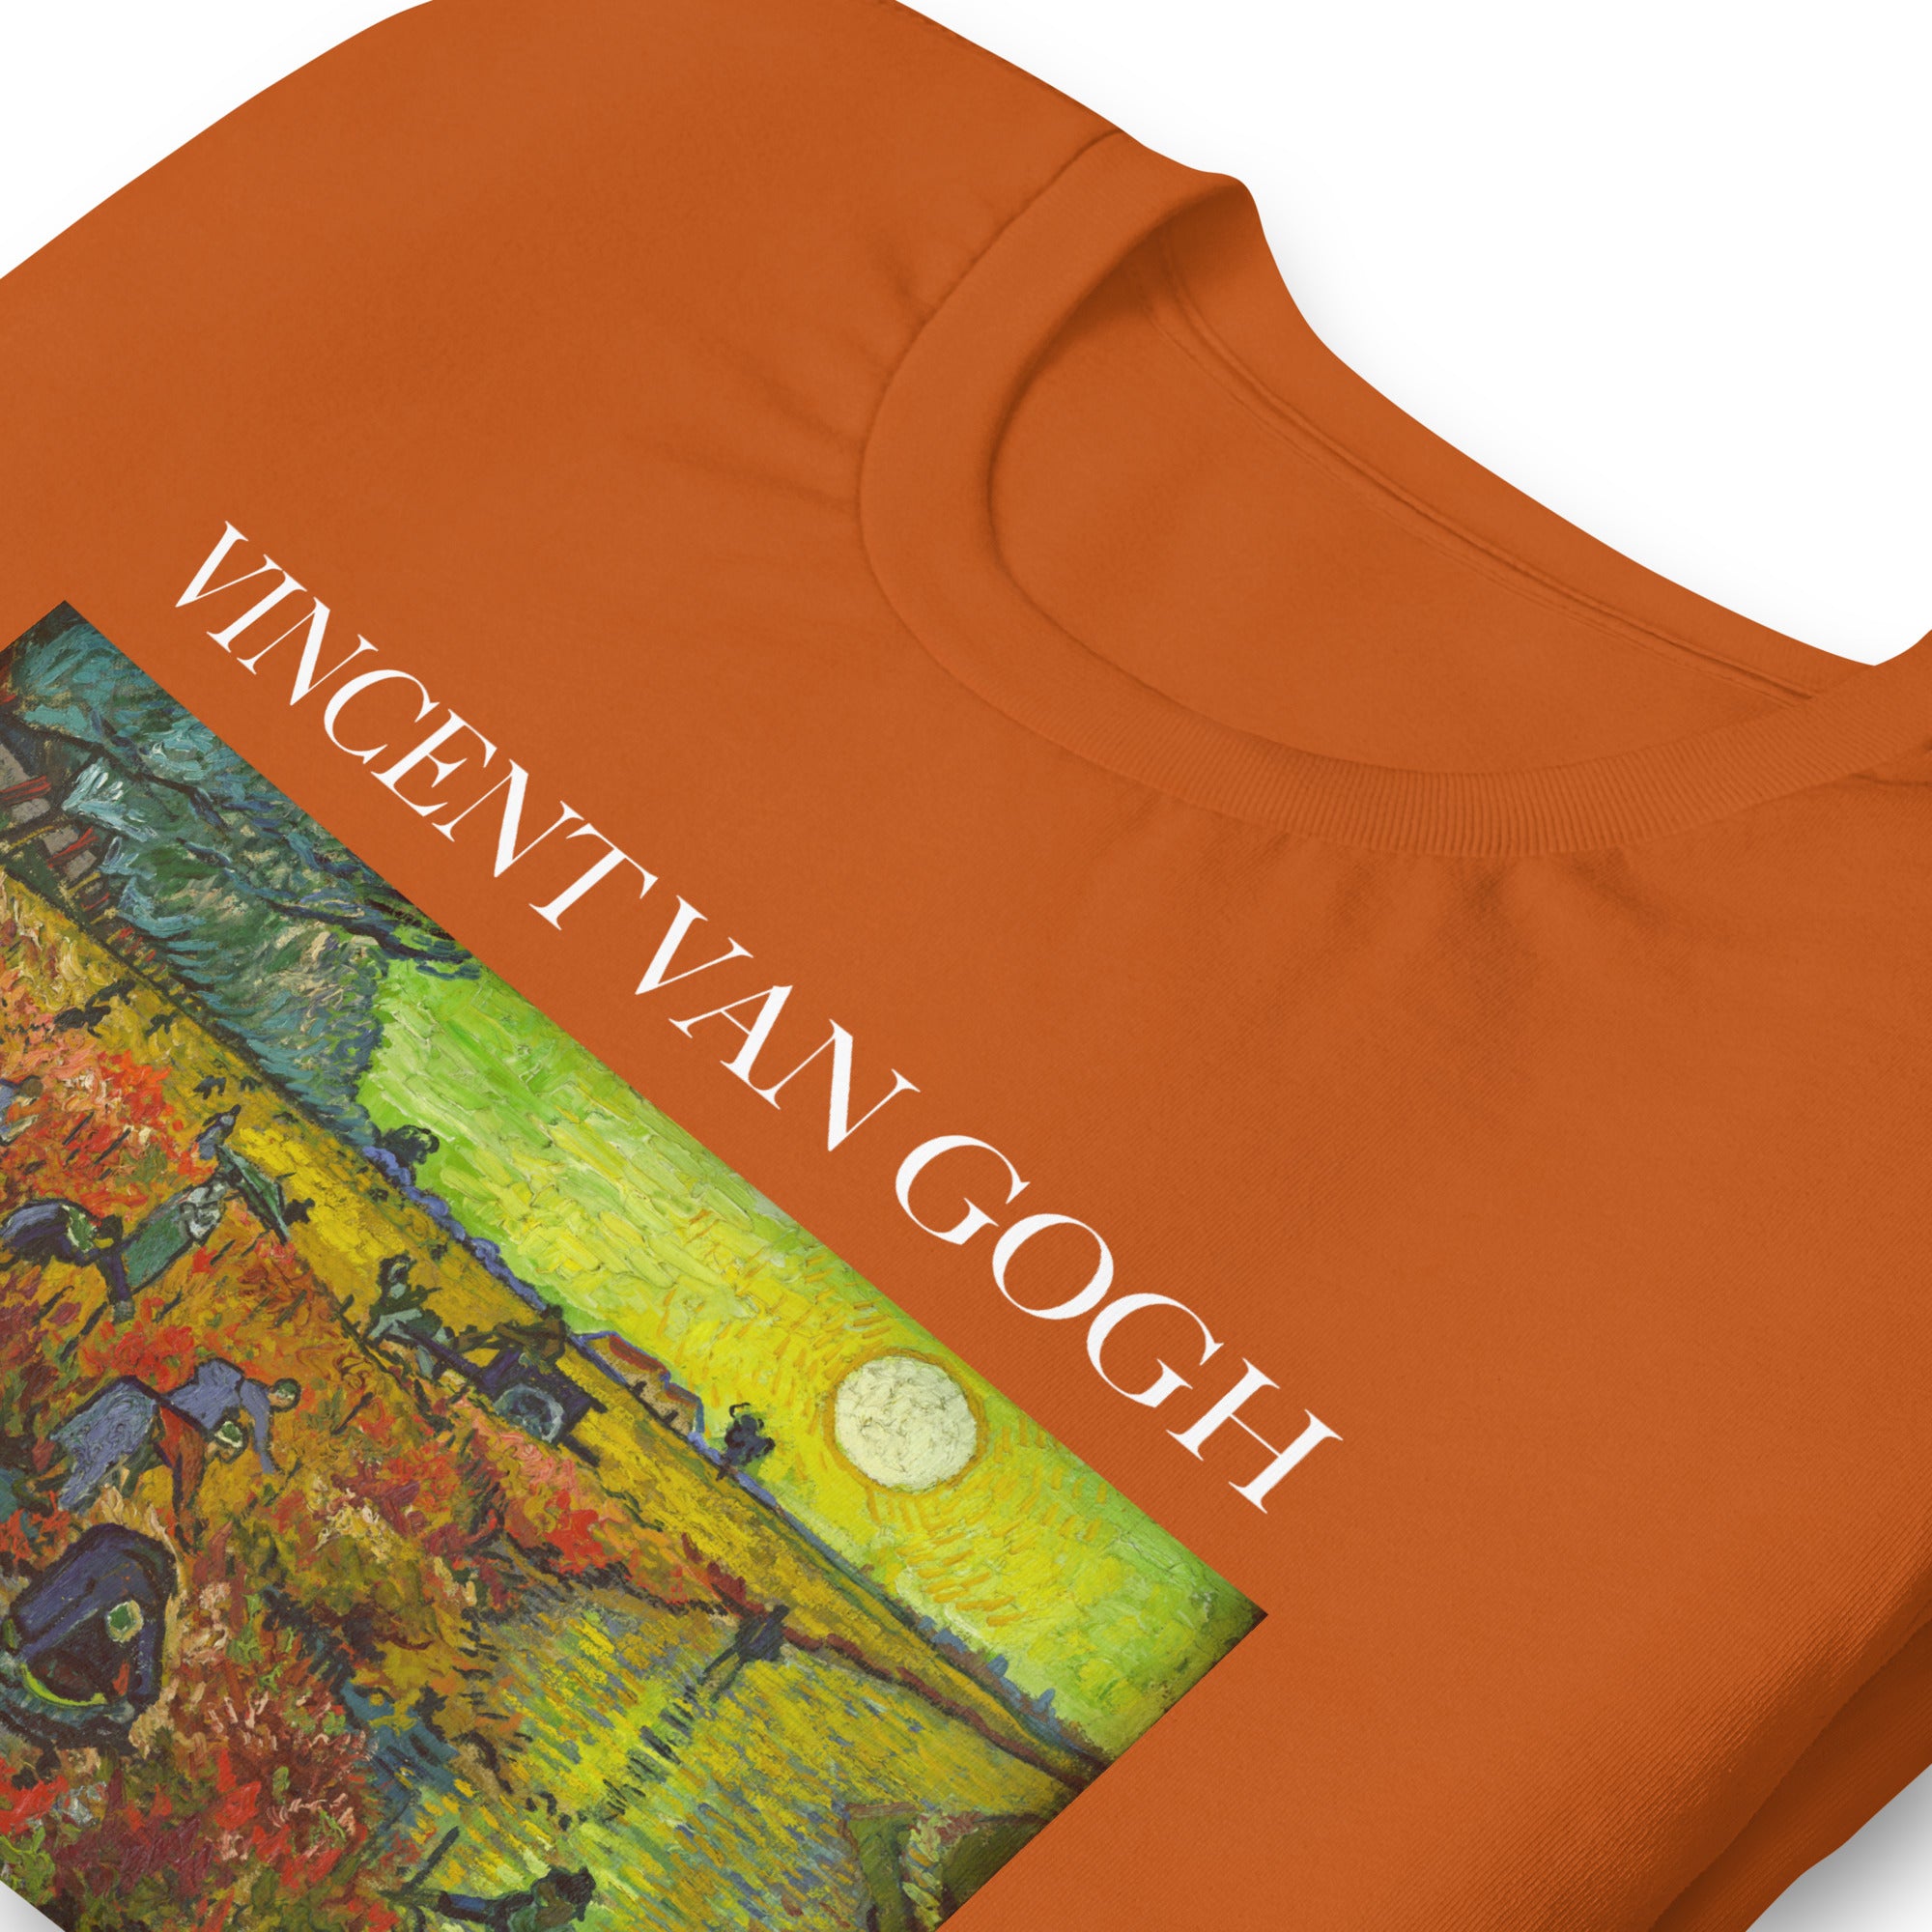 Vincent van Gogh T-Shirt „Der rote Weinberg“, berühmtes Gemälde, Unisex, klassisches Kunst-T-Shirt